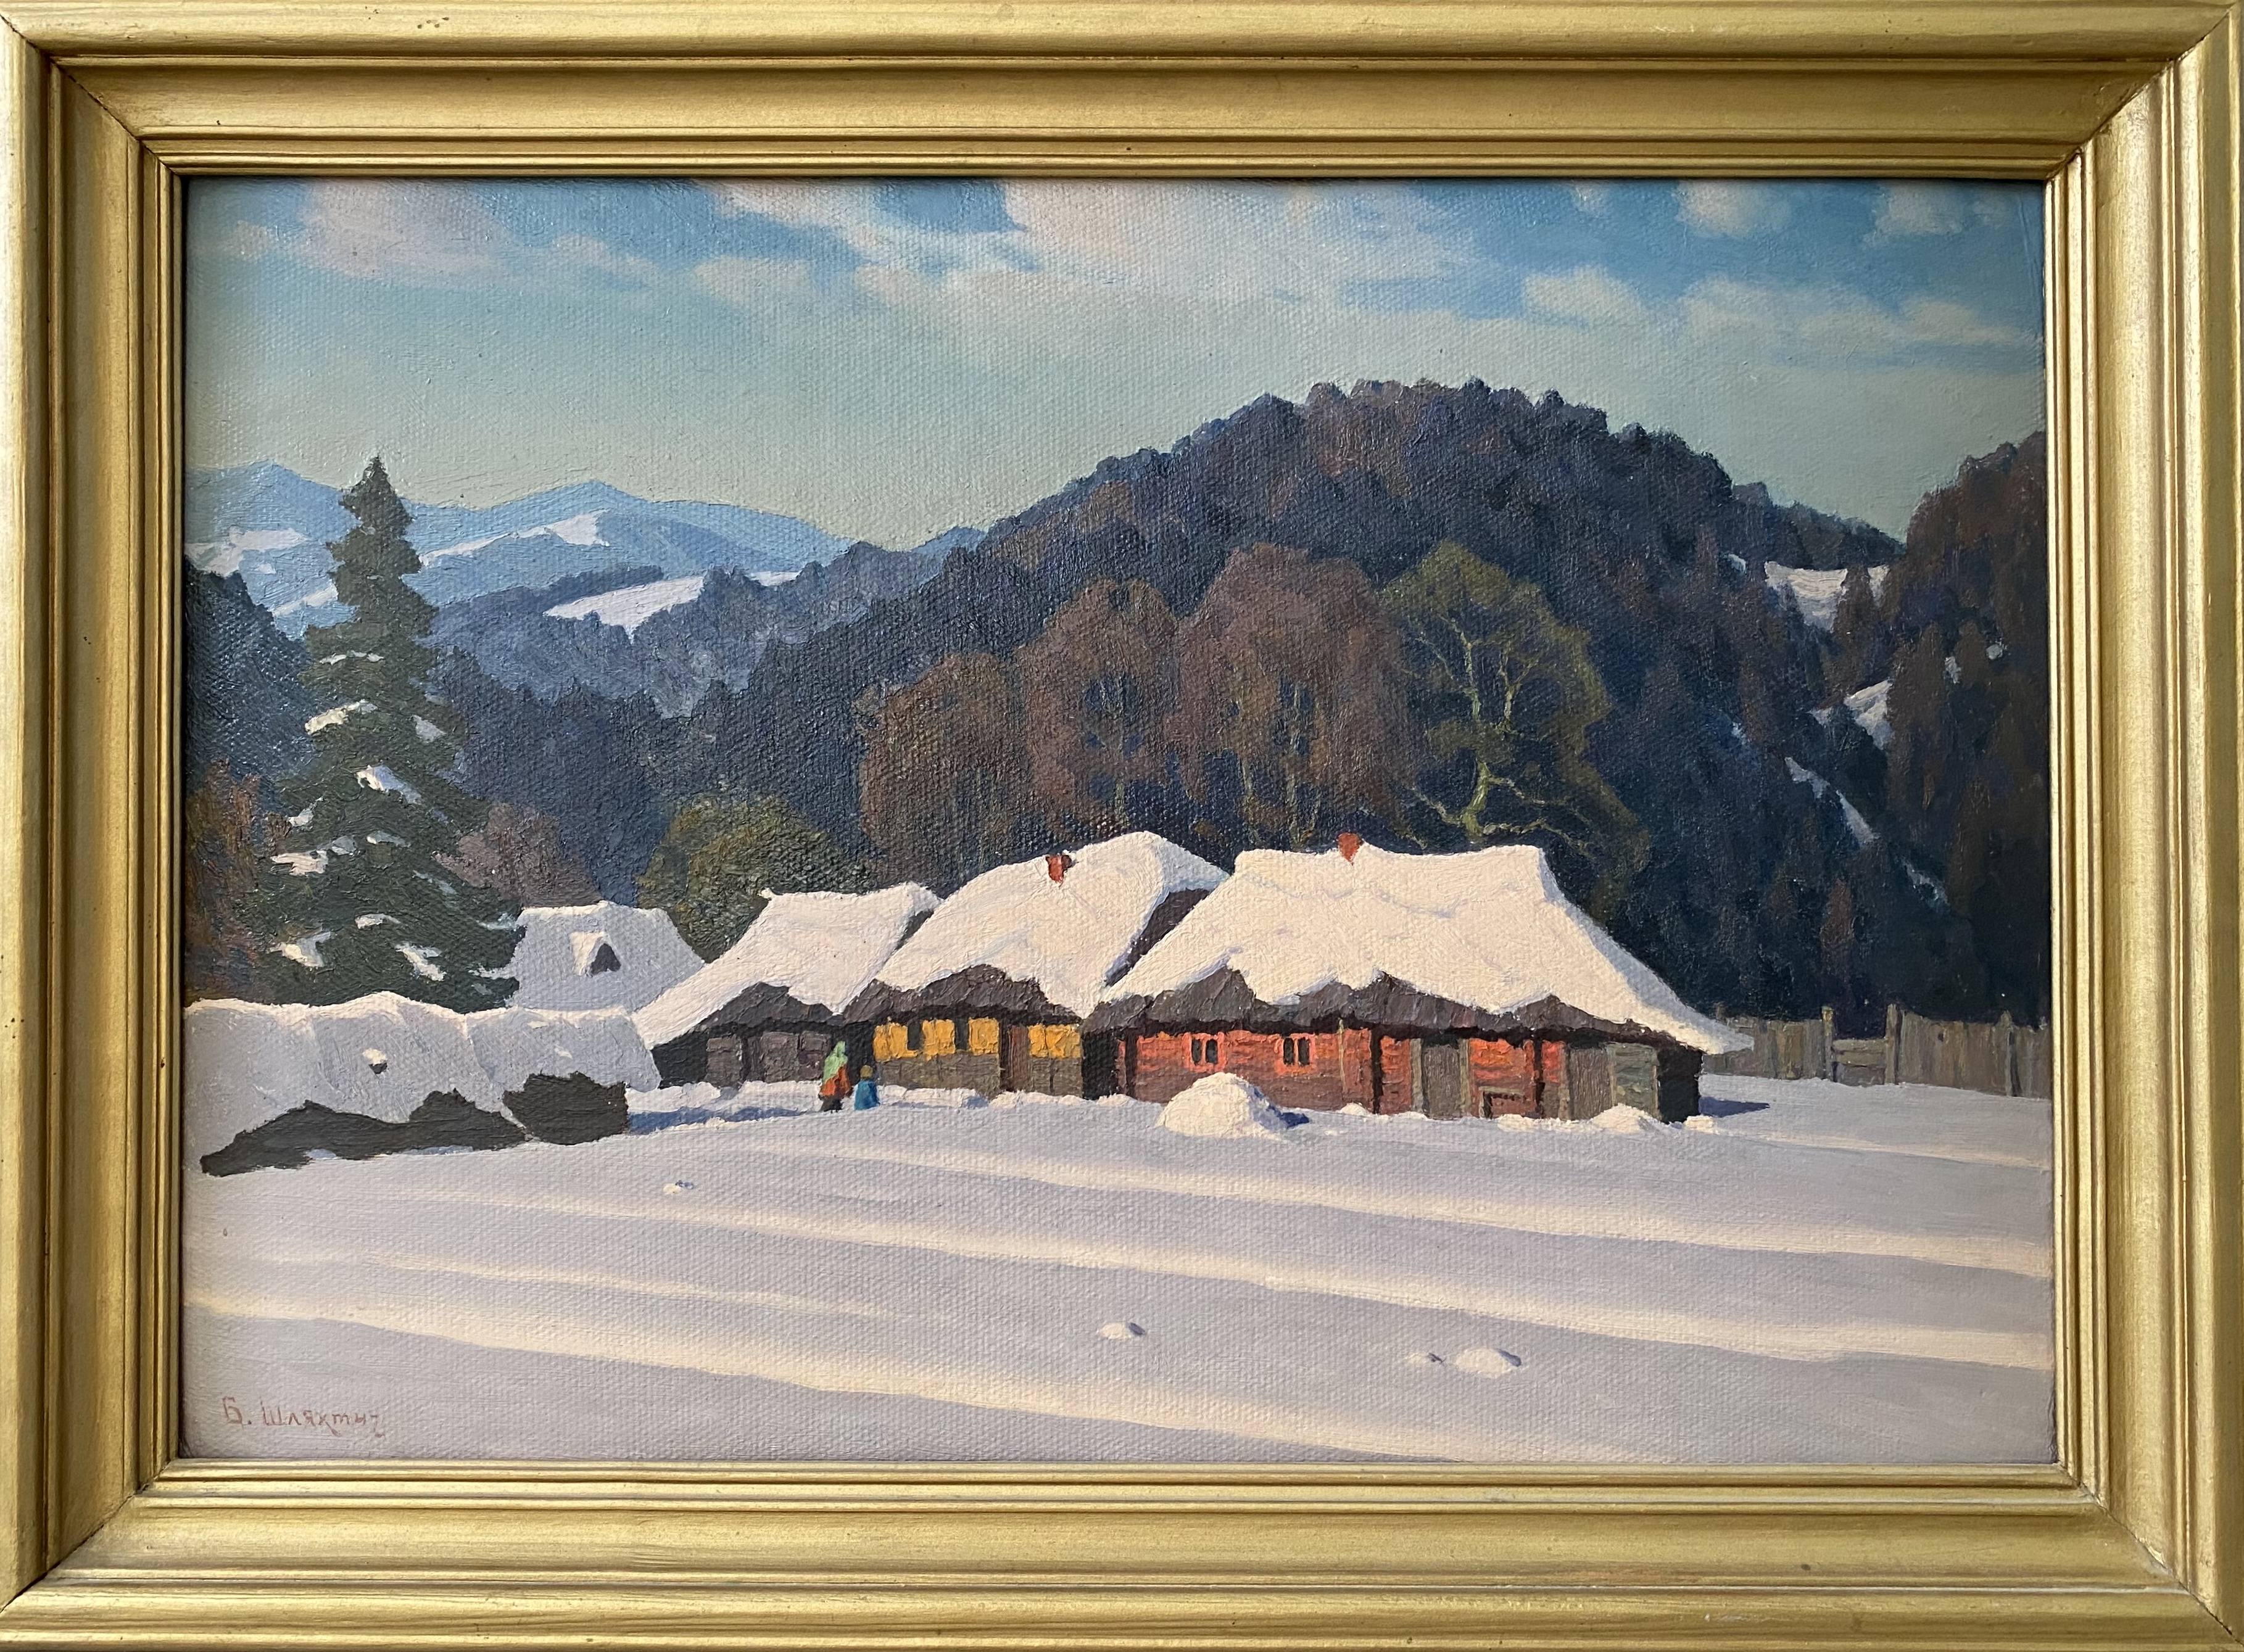 Шляхтич Б. Зима в Карпатах 40-55 см., картон, масло 2002 год - 1